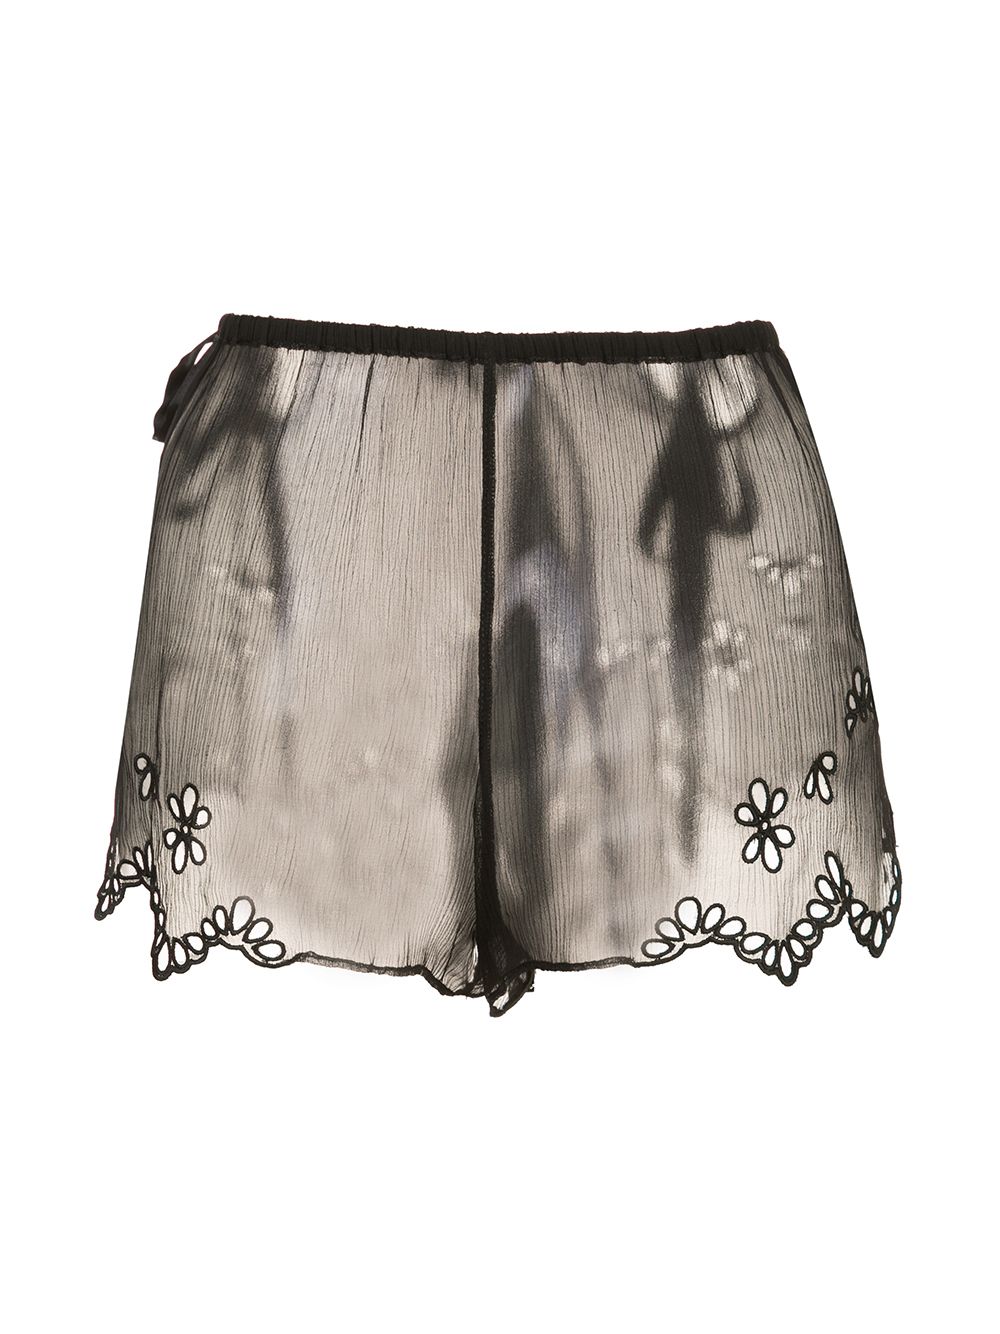 Kiki De Montparnasse Sheer Lace Shorts - Farfetch